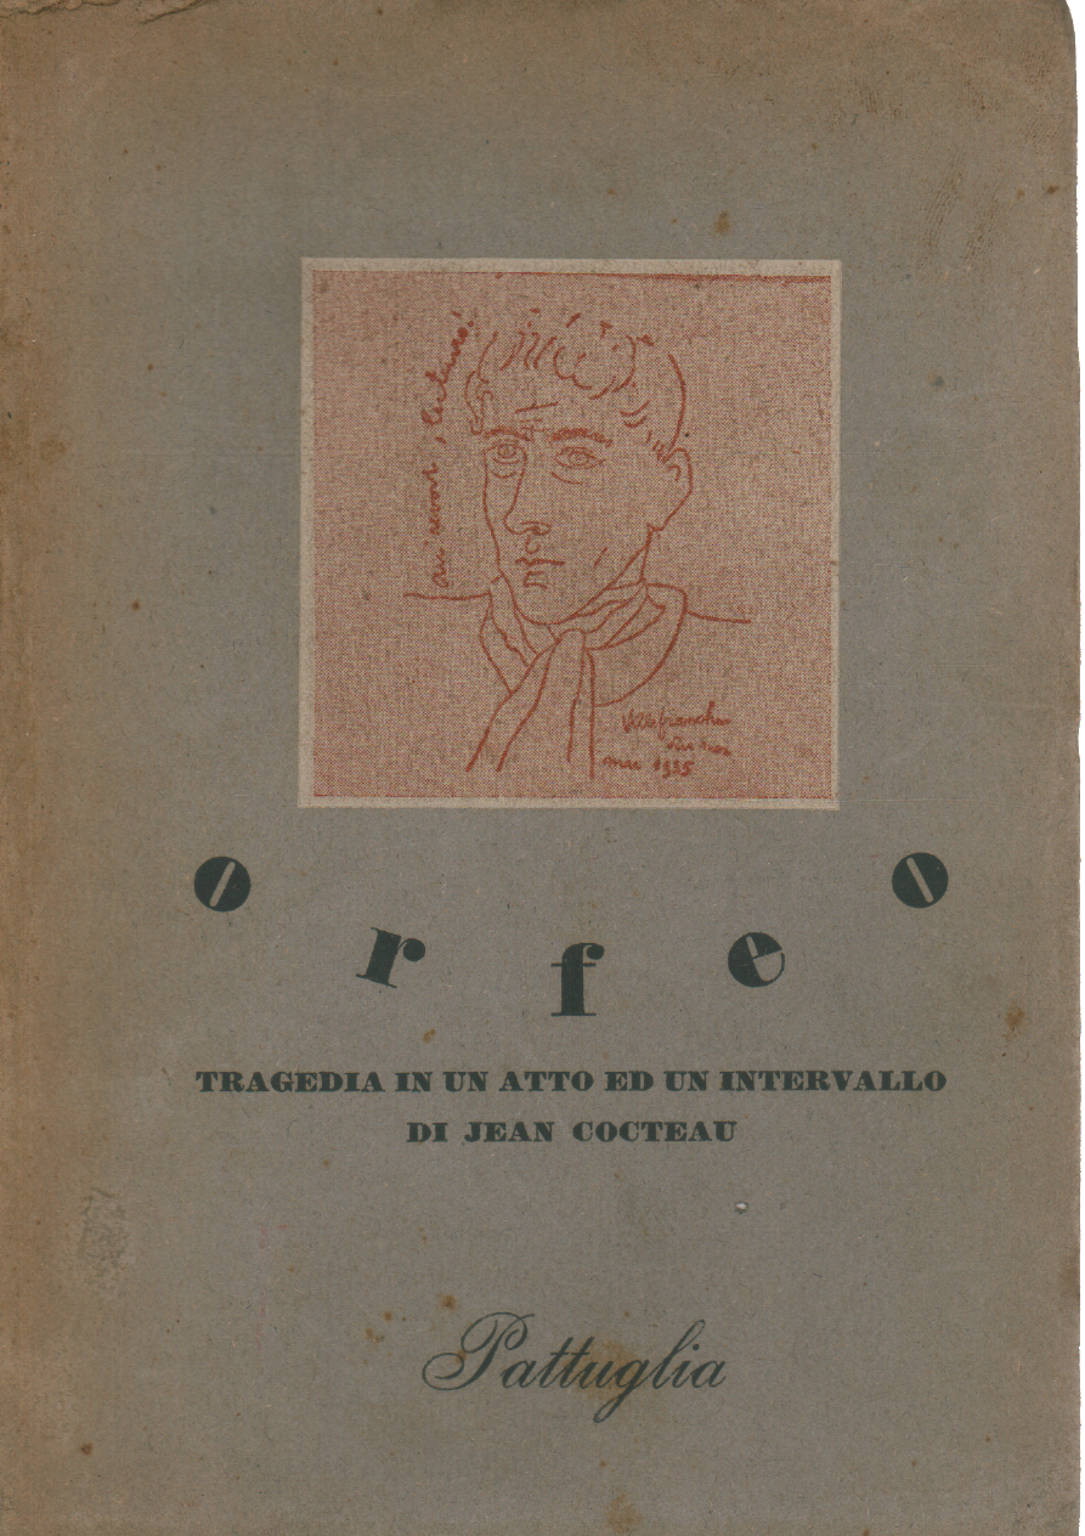 Orphée, Jean Cocteau